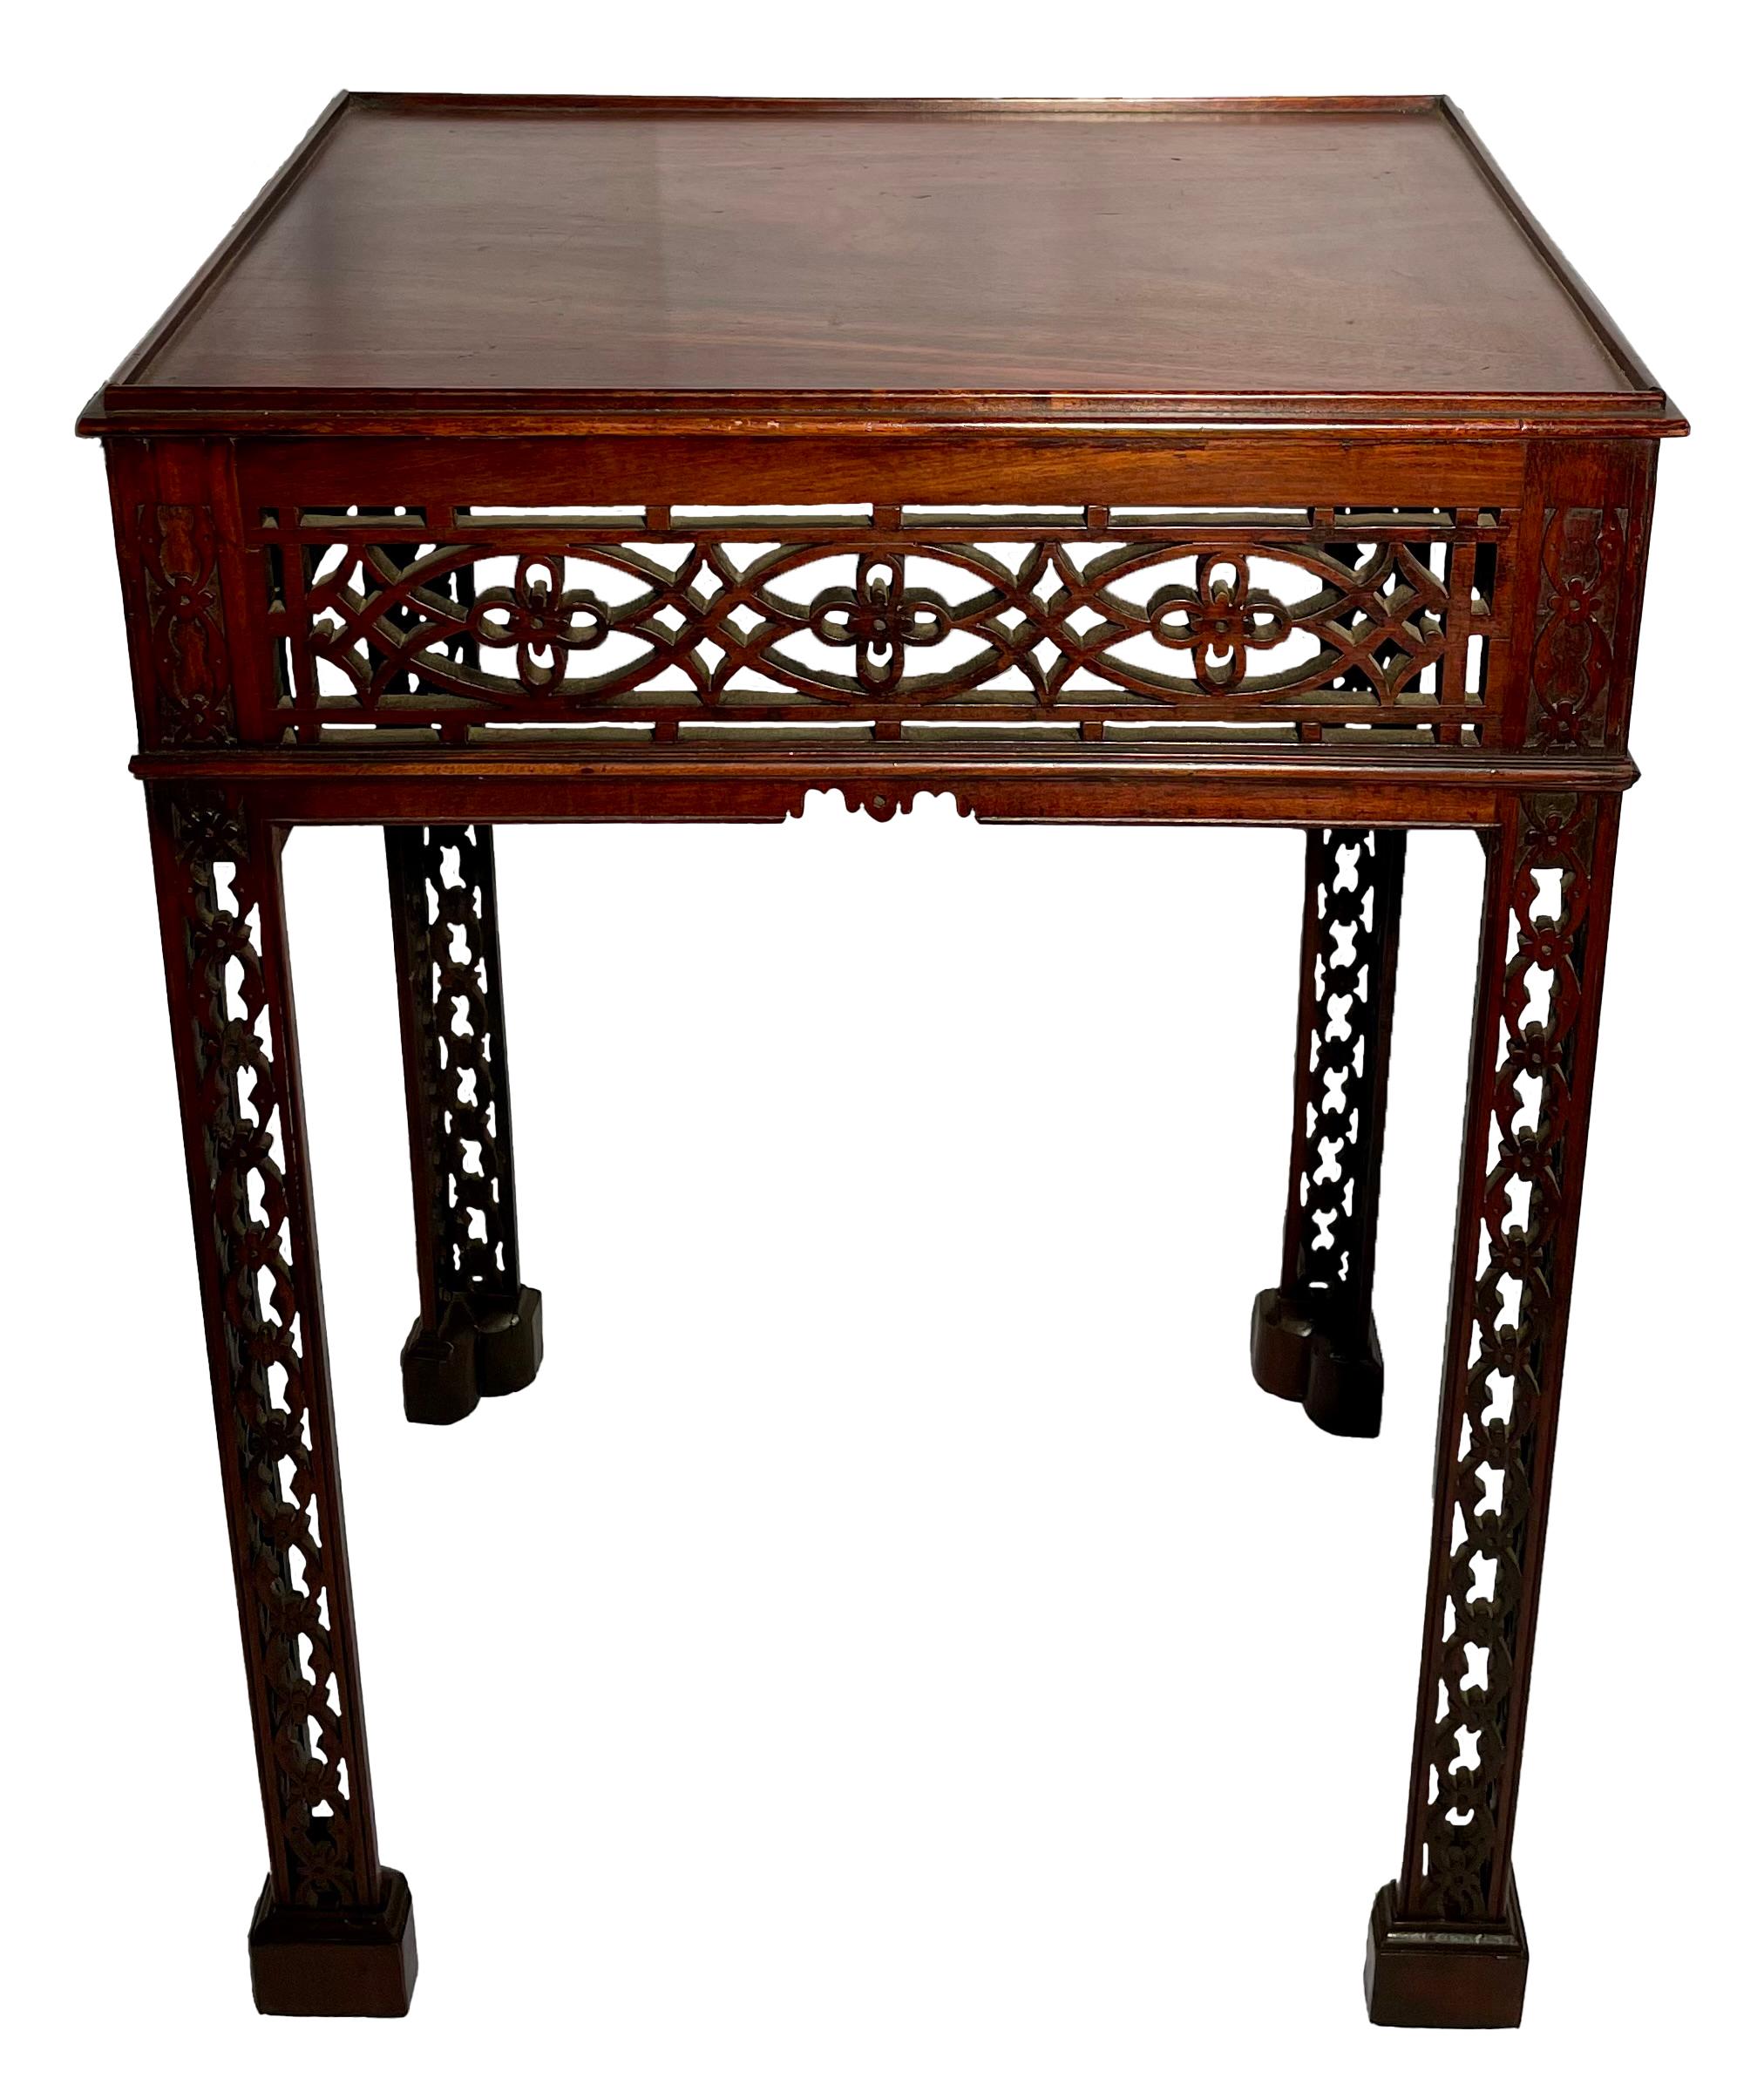 Antique English Victorian mahogany tea table with Chippendale fretwork, circa 1880.